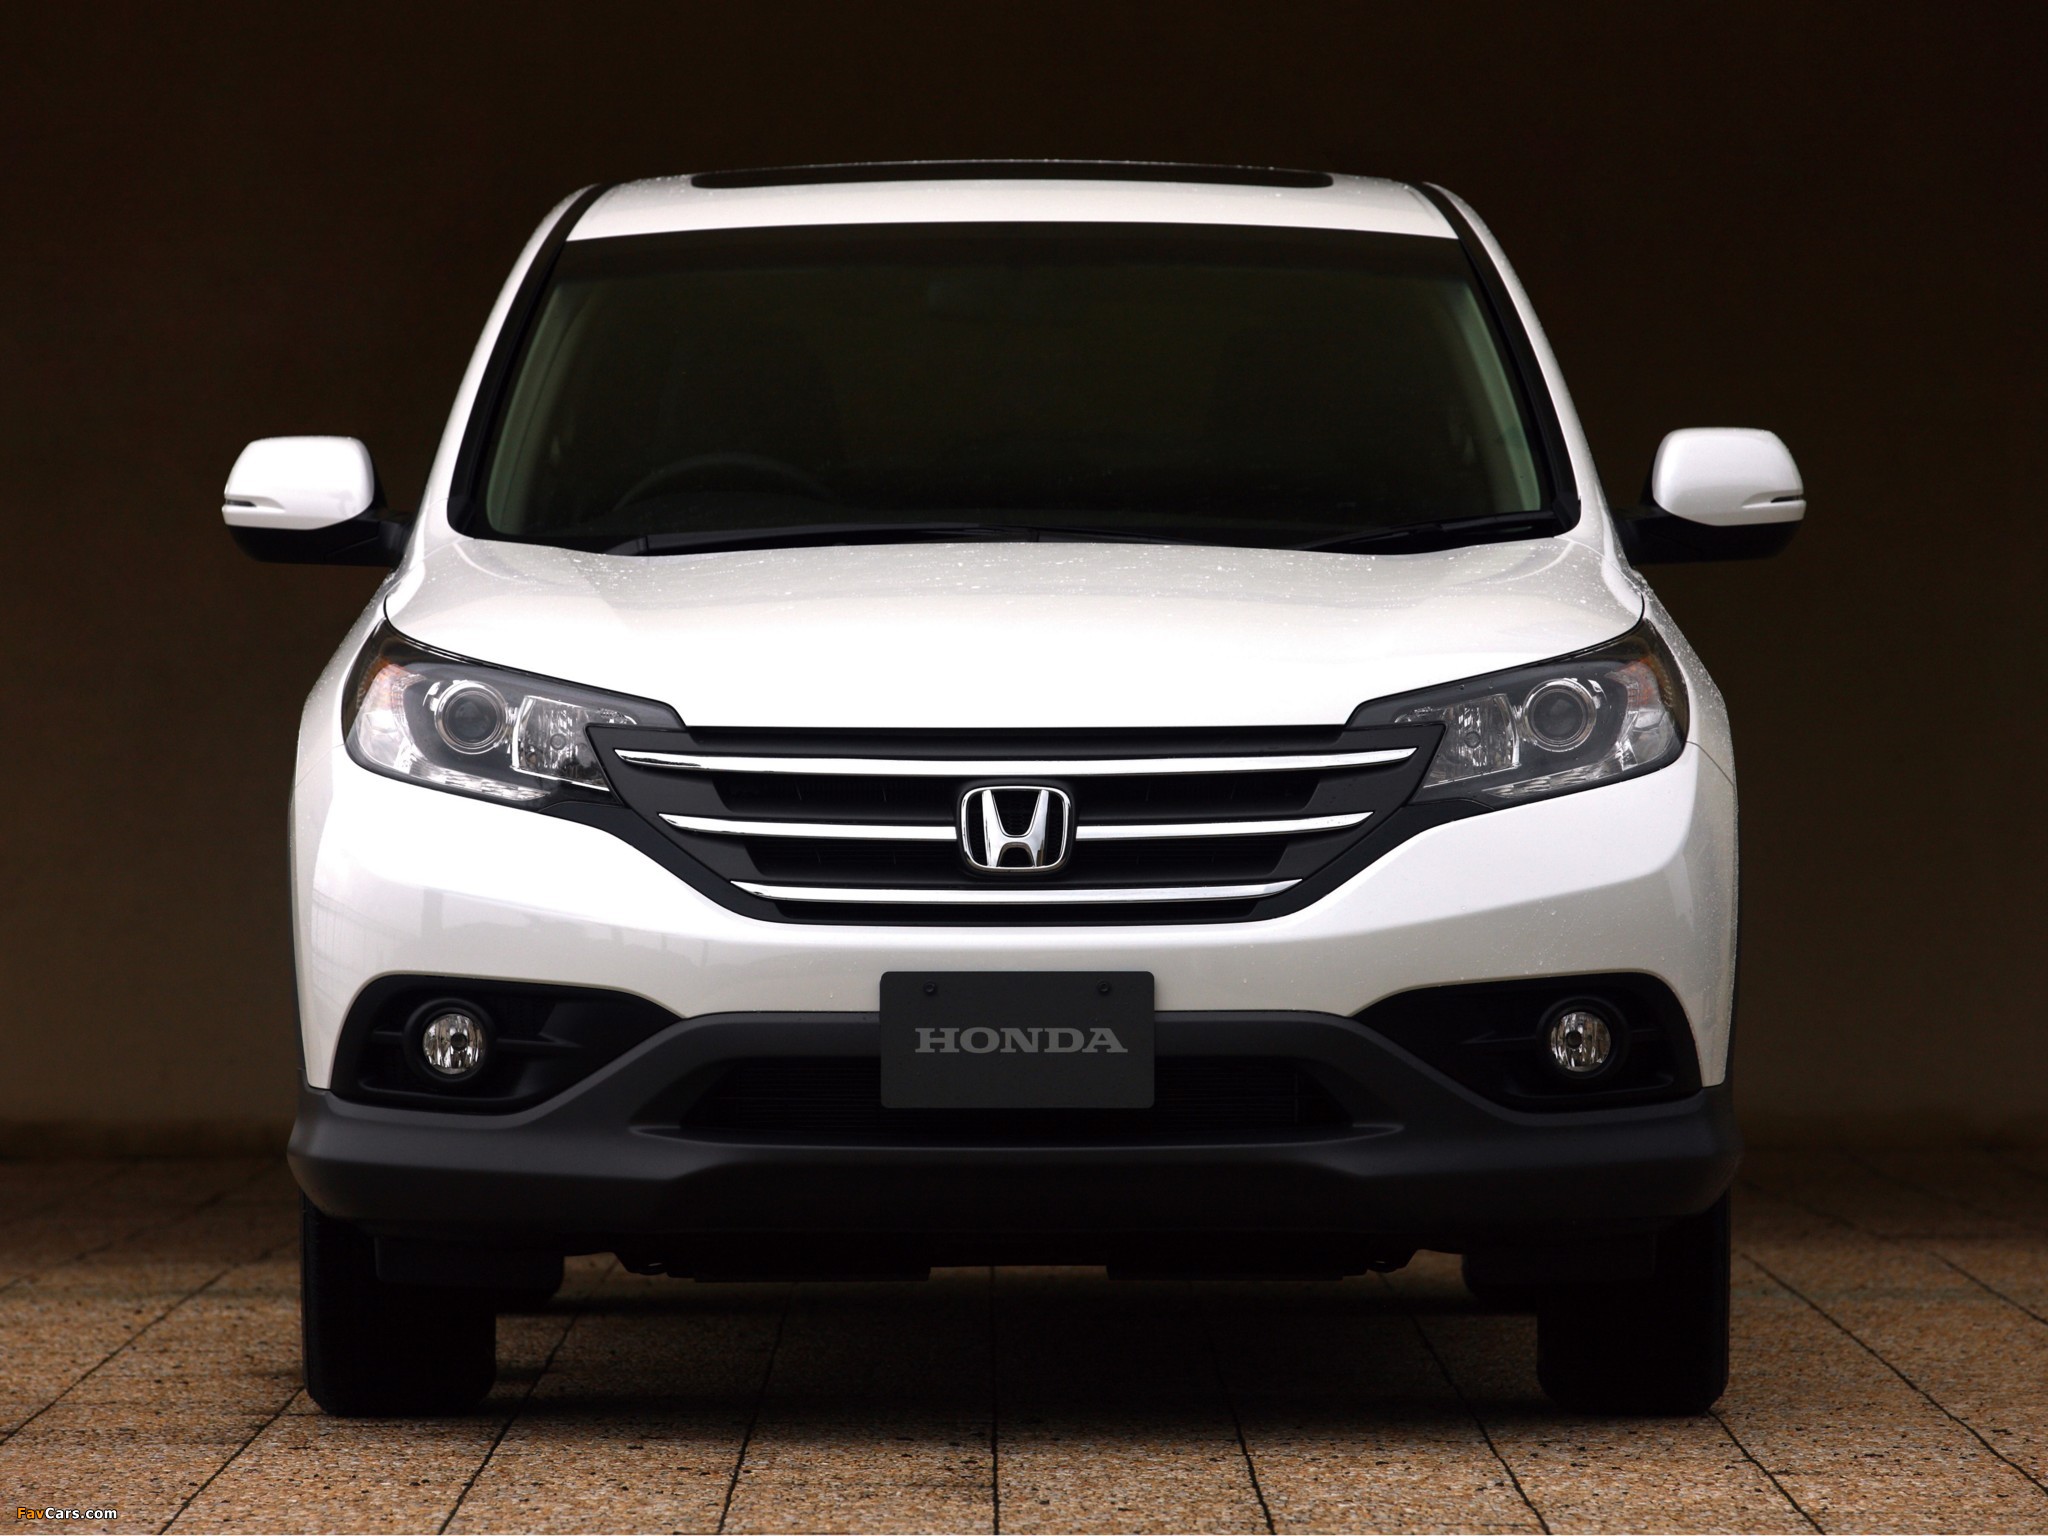 Купить хонда срв новгород. Honda CRV 2012 белая. Honda CR-V 2011. Honda CRV белая 2013. Honda CR-V белая CRV 2012.